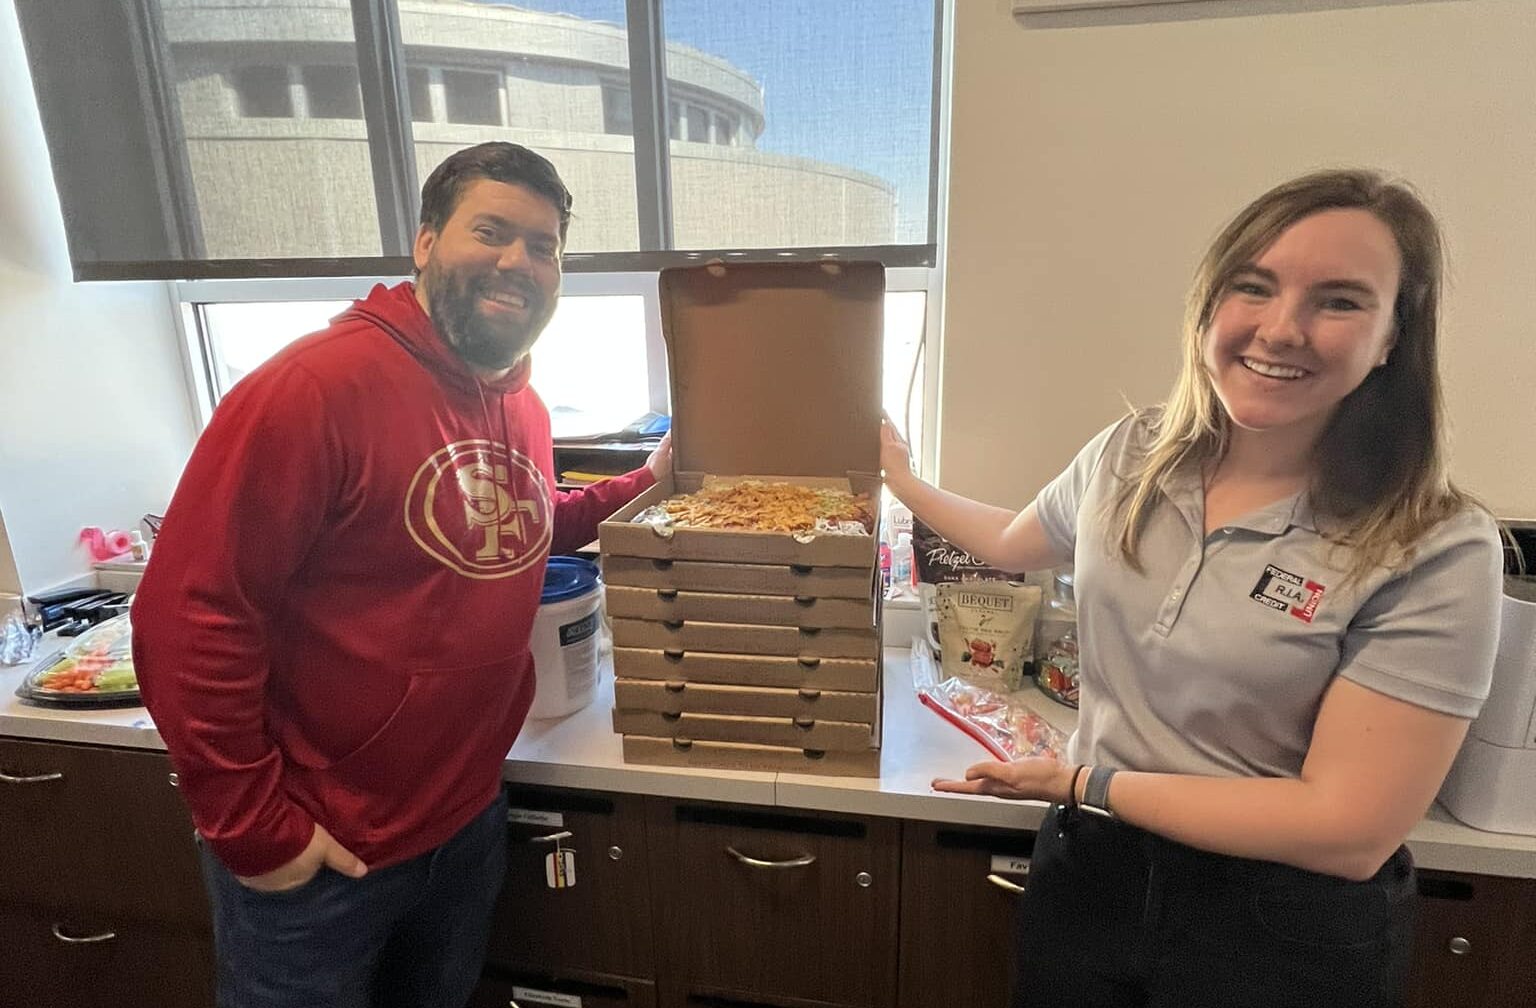 R.I.A. employee giving pizza to telecommunicators